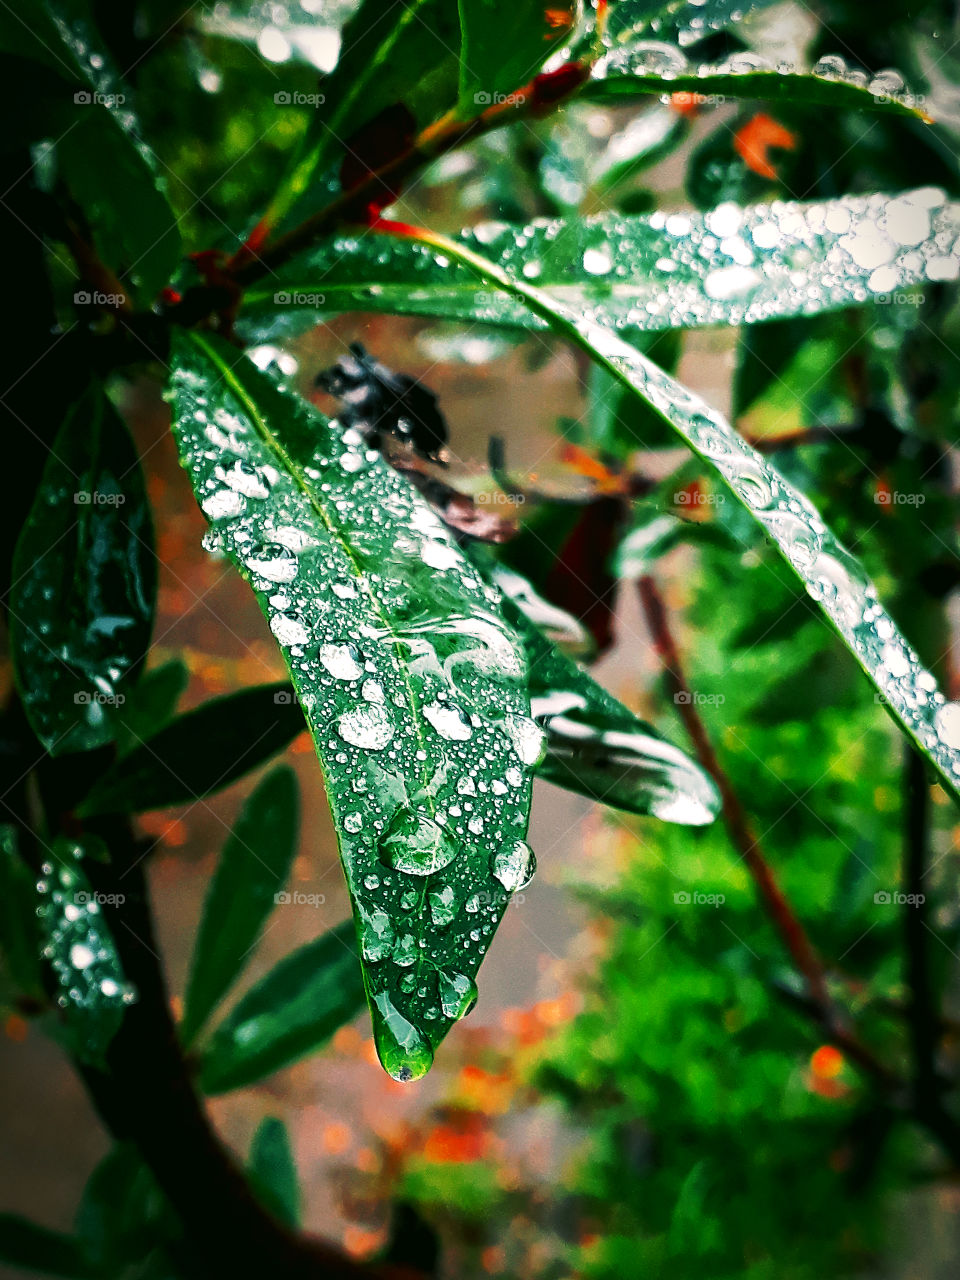 just a leaf